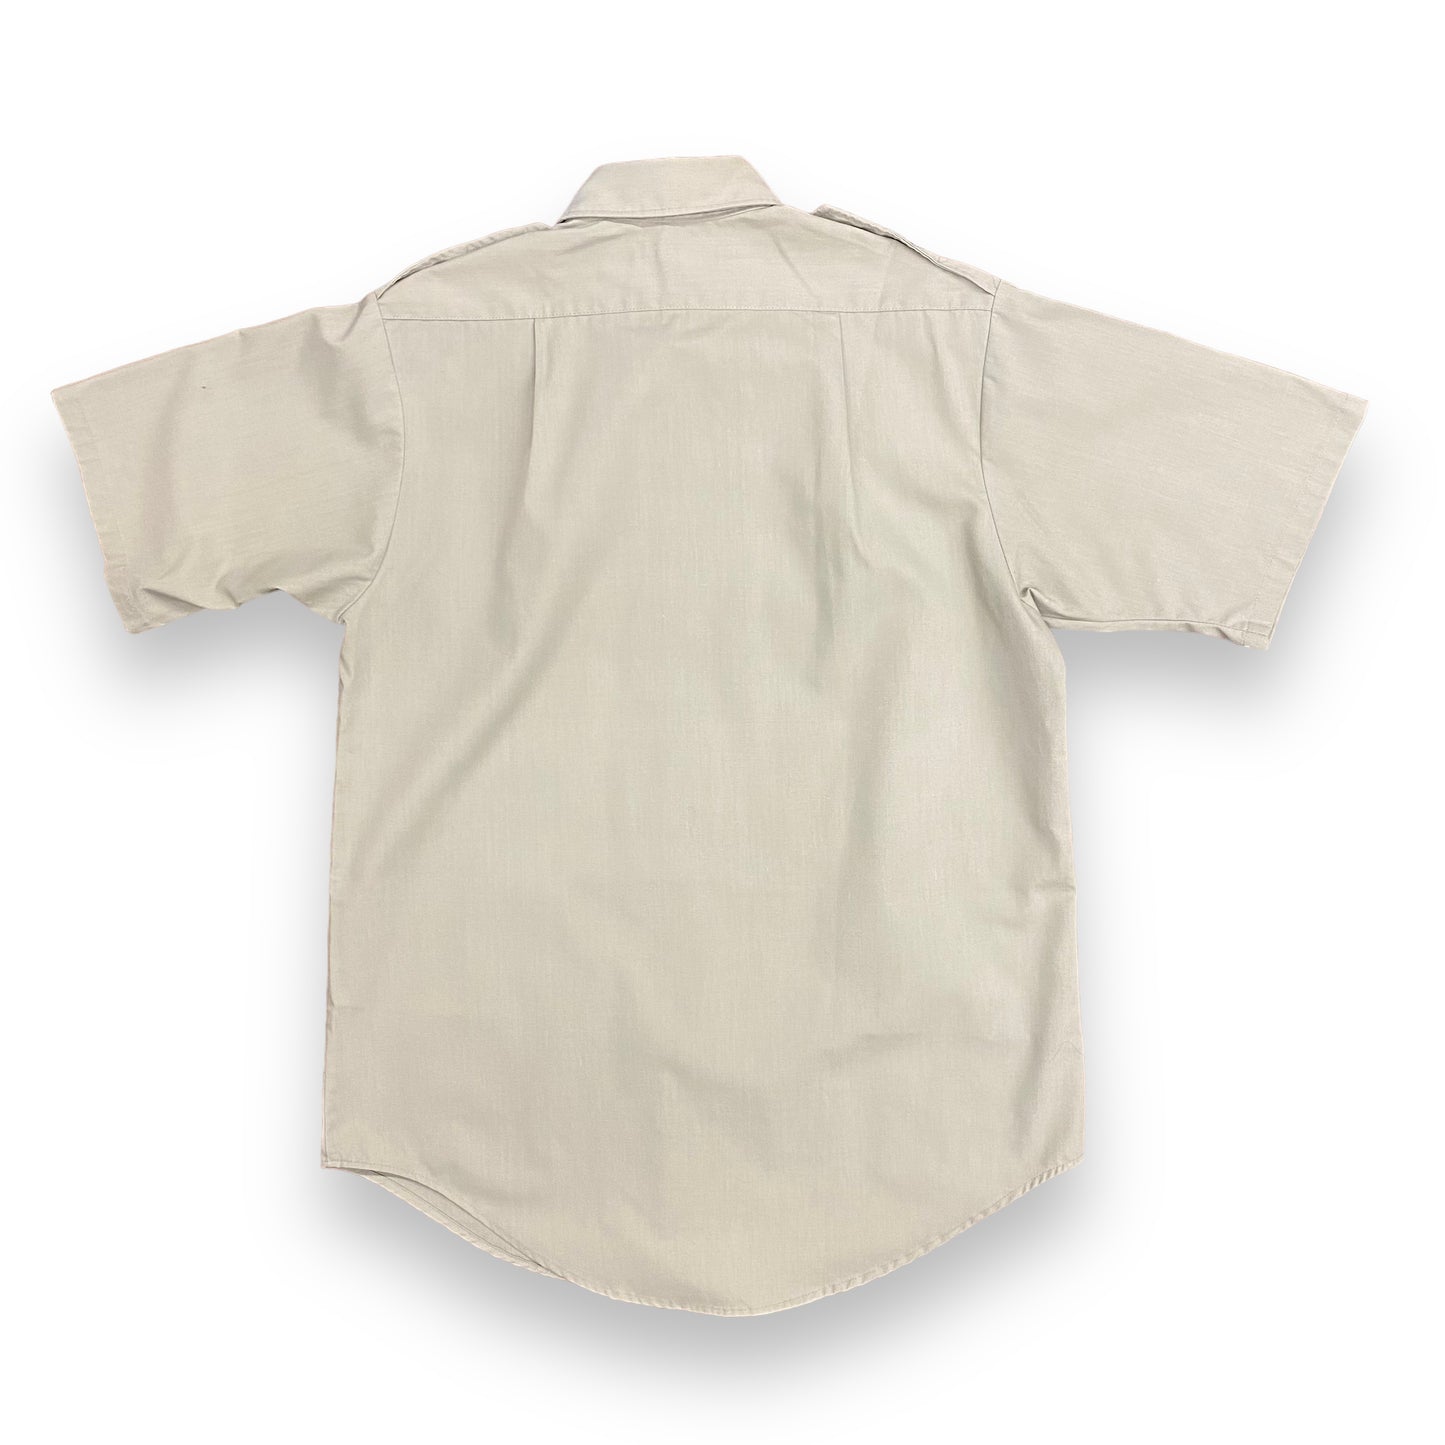 1970s Utica Duxbak "Kamp-it" Button Up Shirt - Size Medium/Large